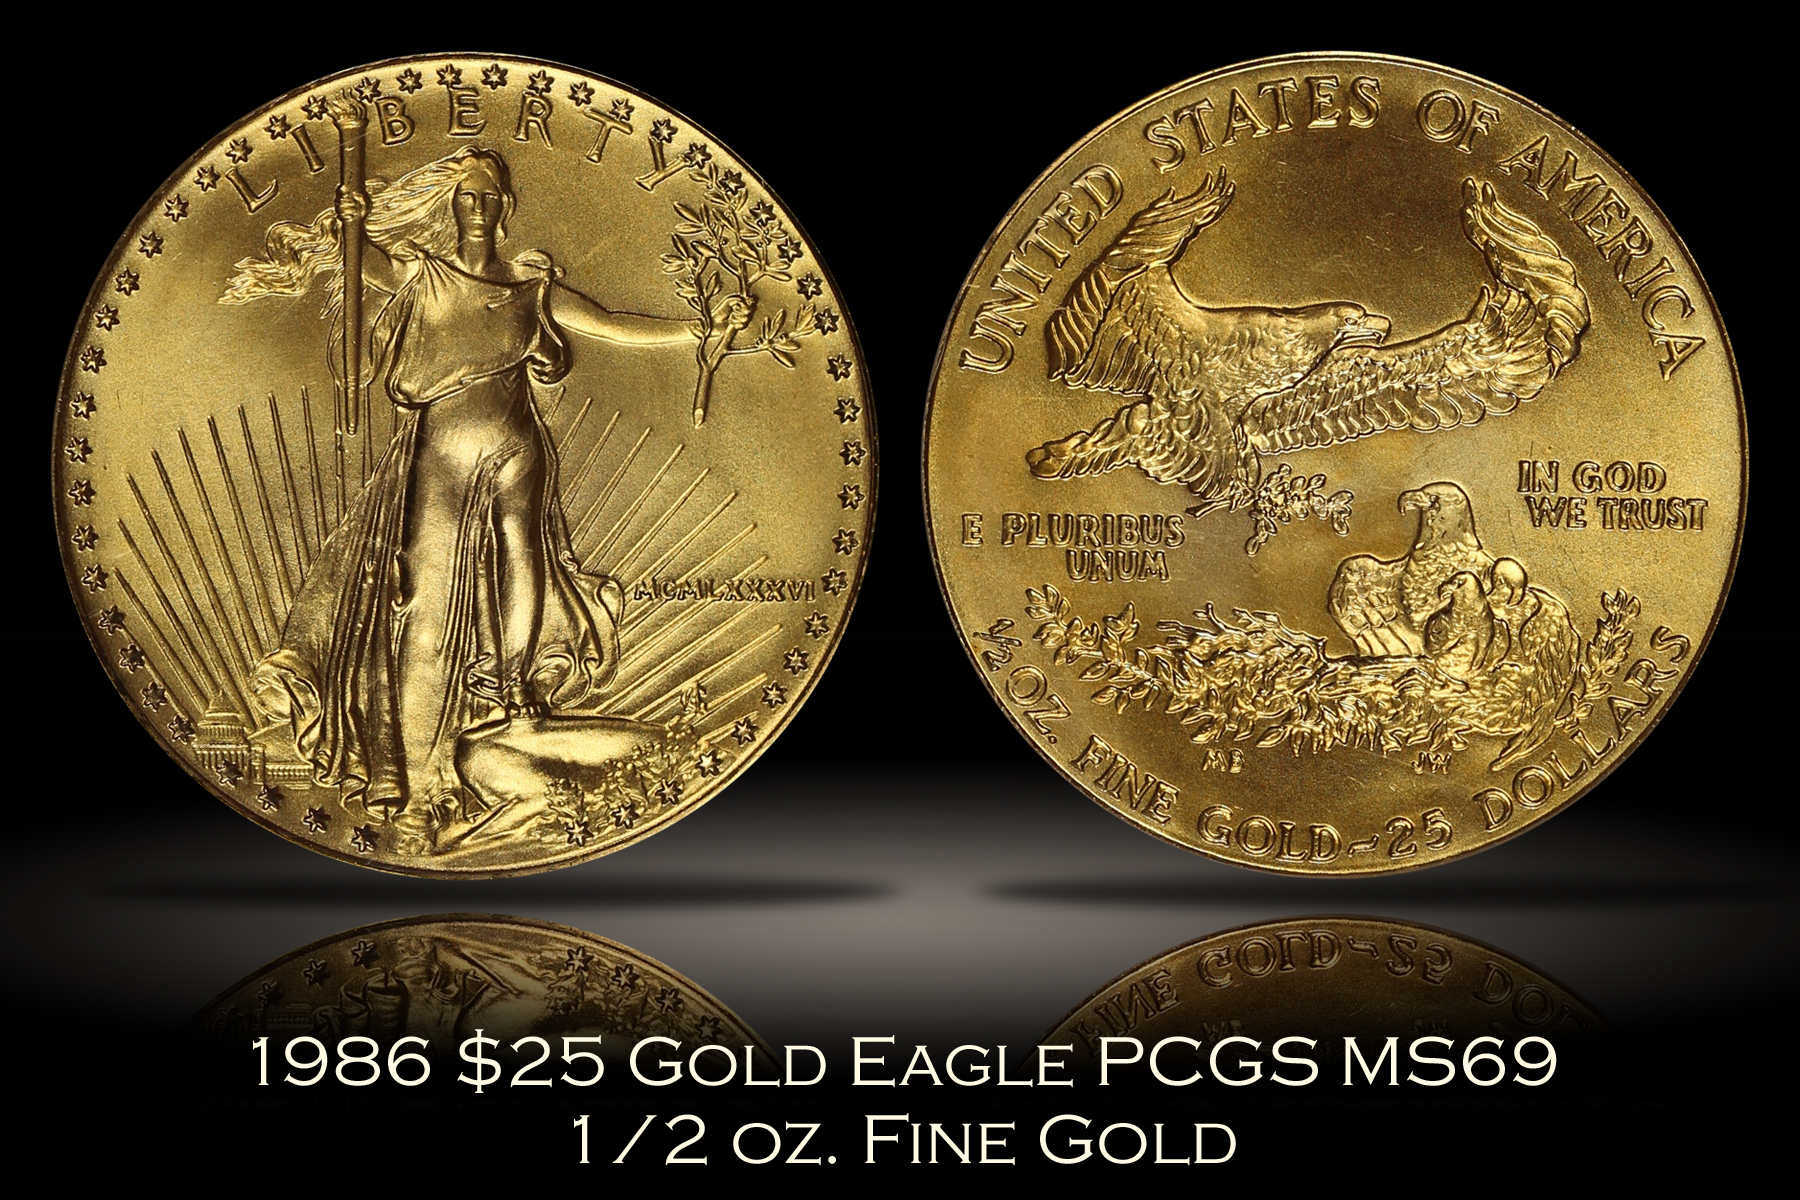 Michael Kittle Rare Coins - 1986 $25 1/2 oz. Gold Eagle PCGS MS69